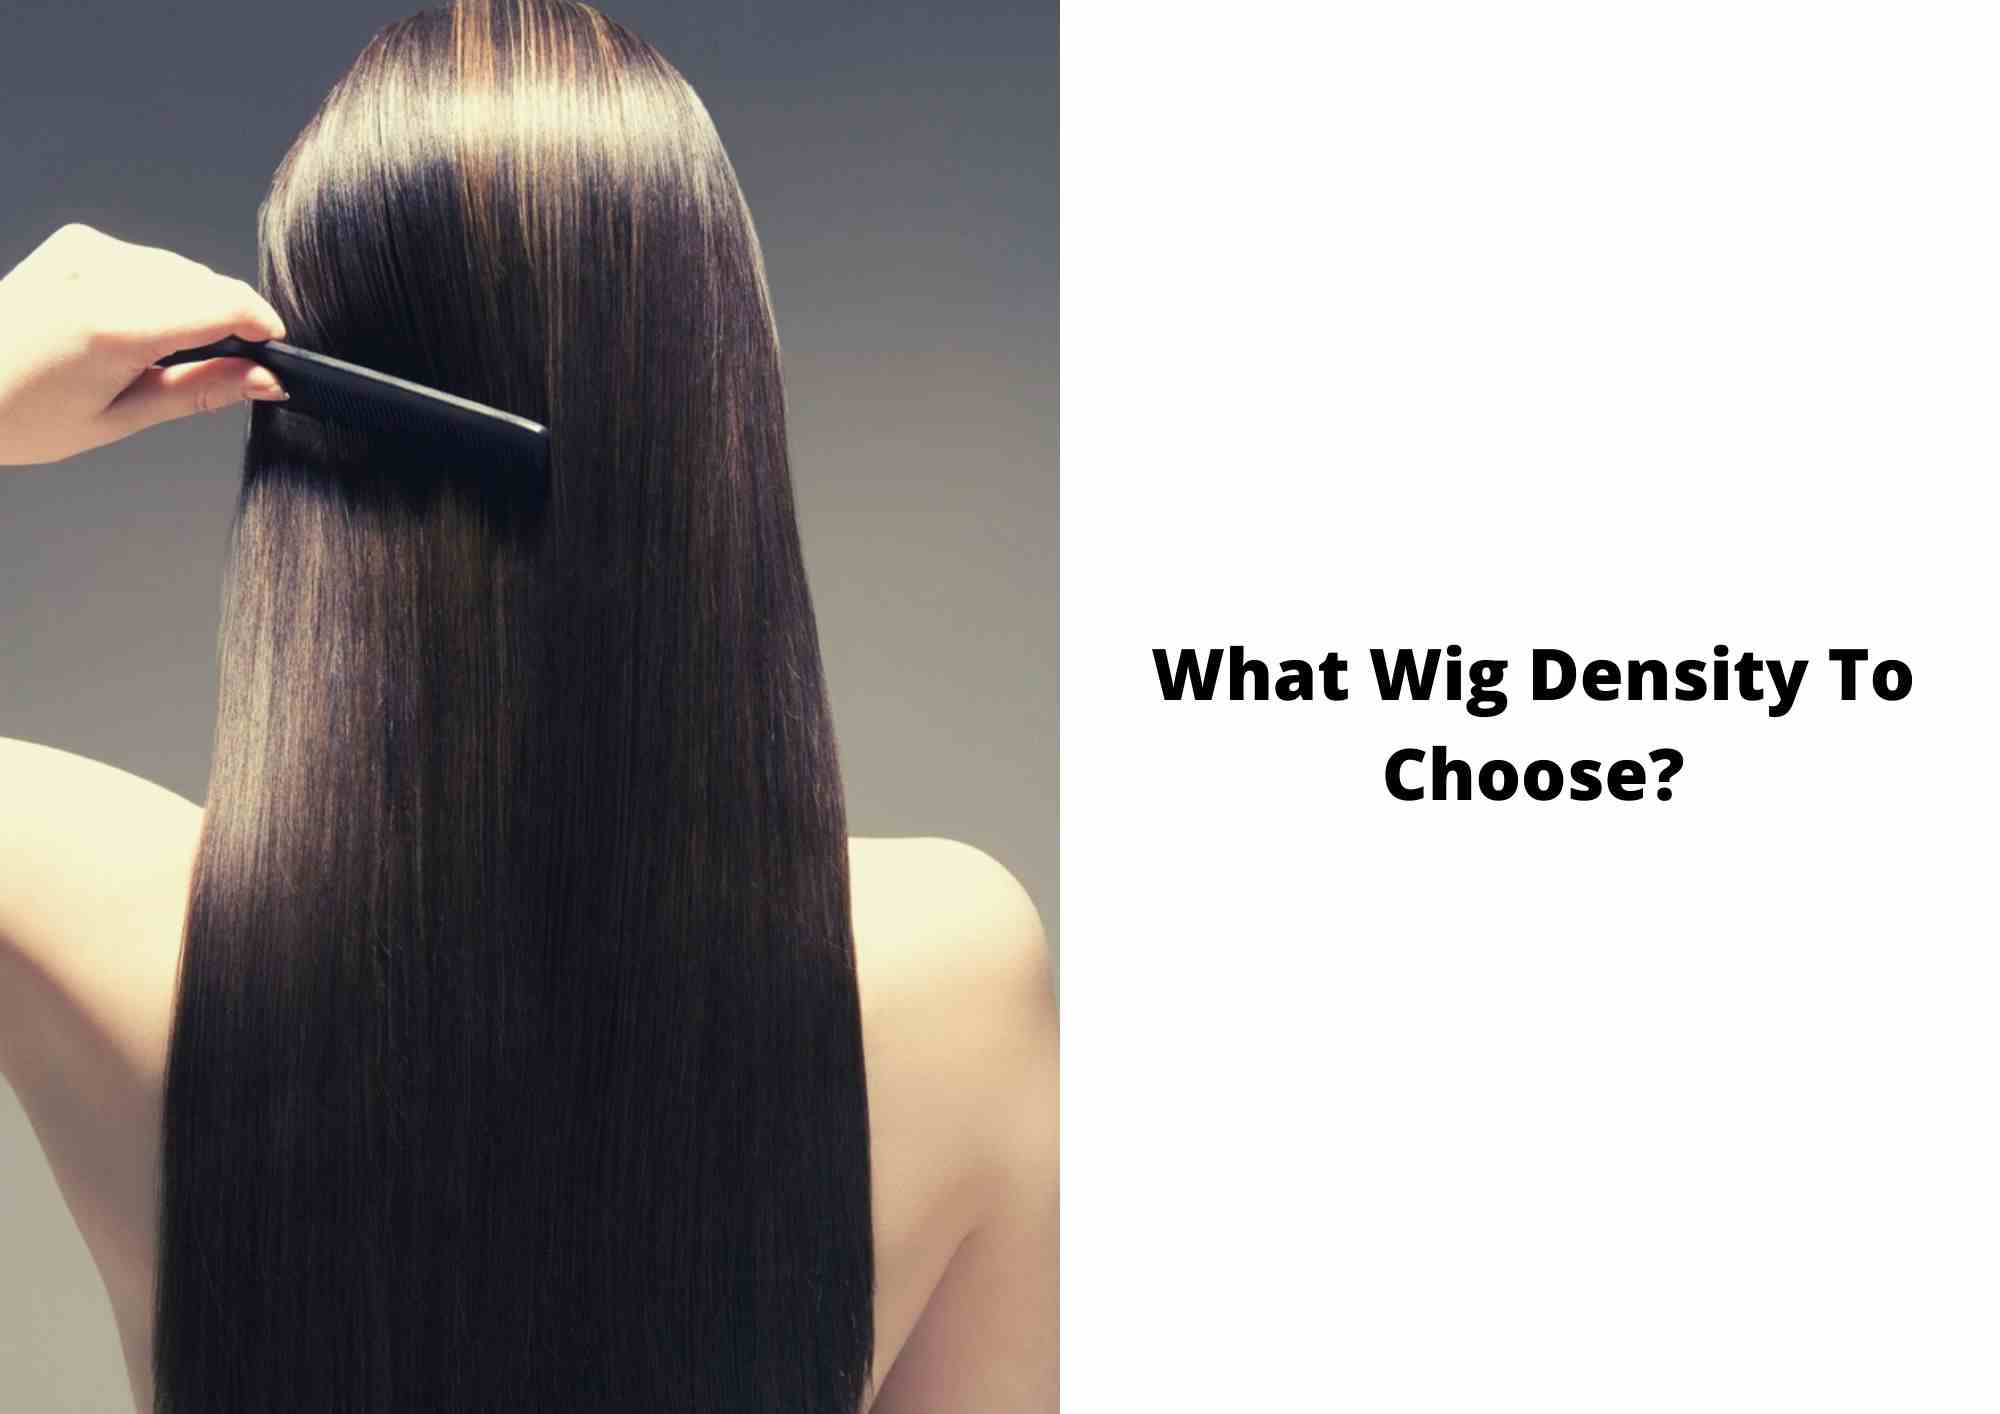 What Wig Density Should You Choose